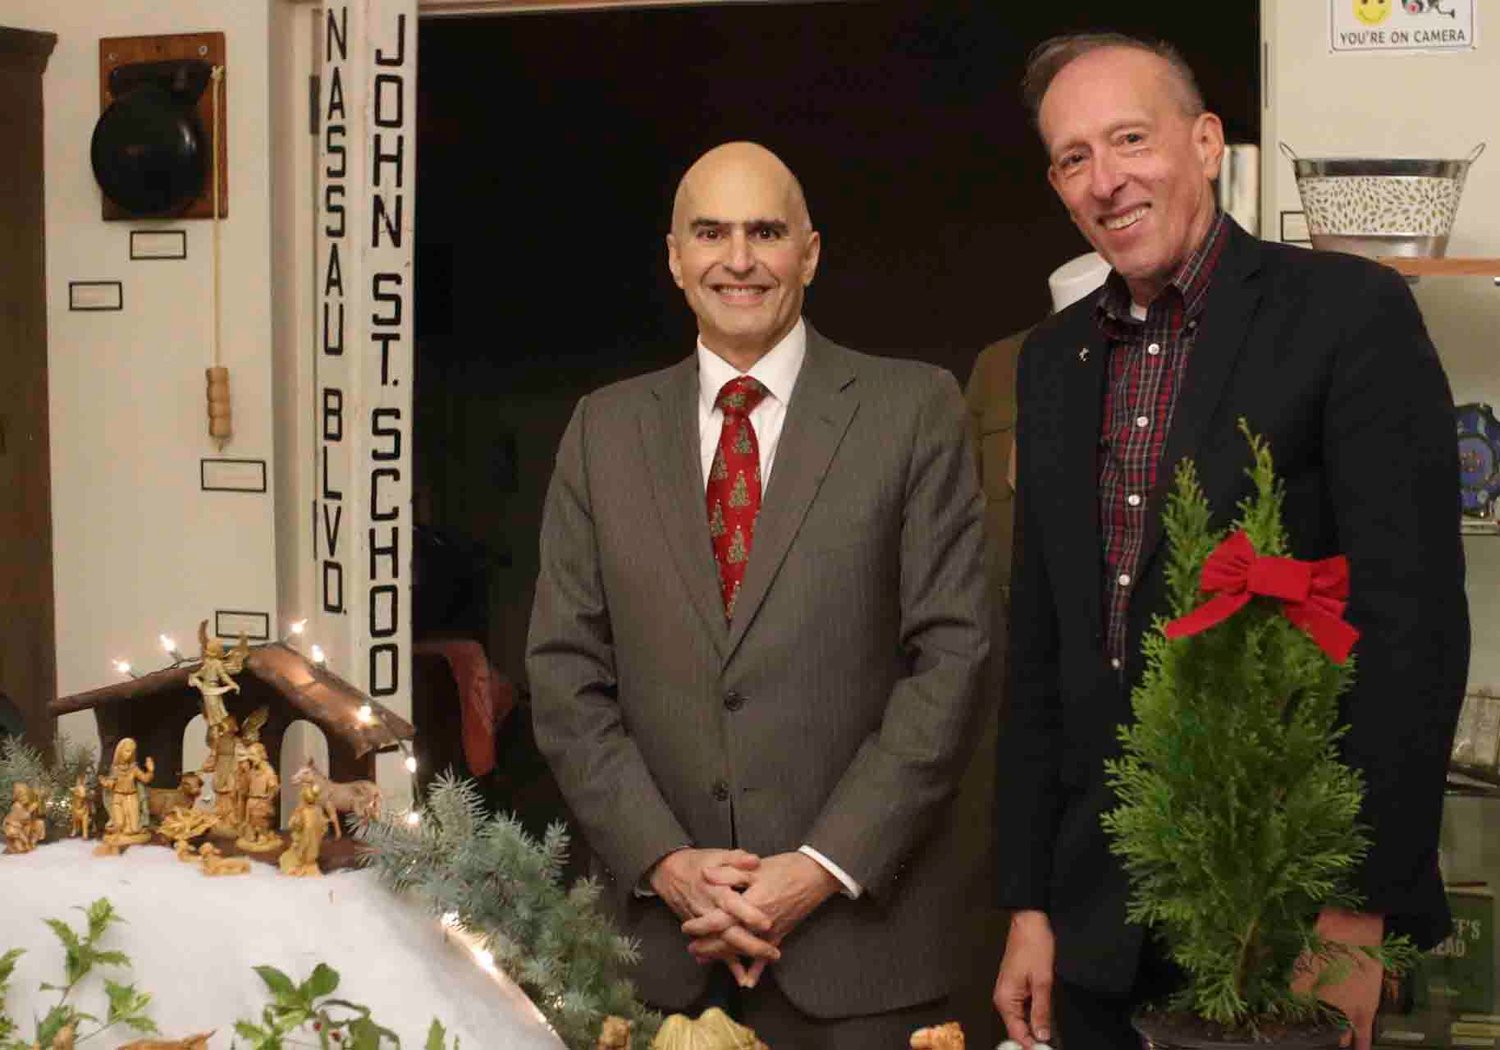 Legislator John Giuffre and past president of the Franklin Square Historical Society Paul VanWie admire the Italian nativity set.